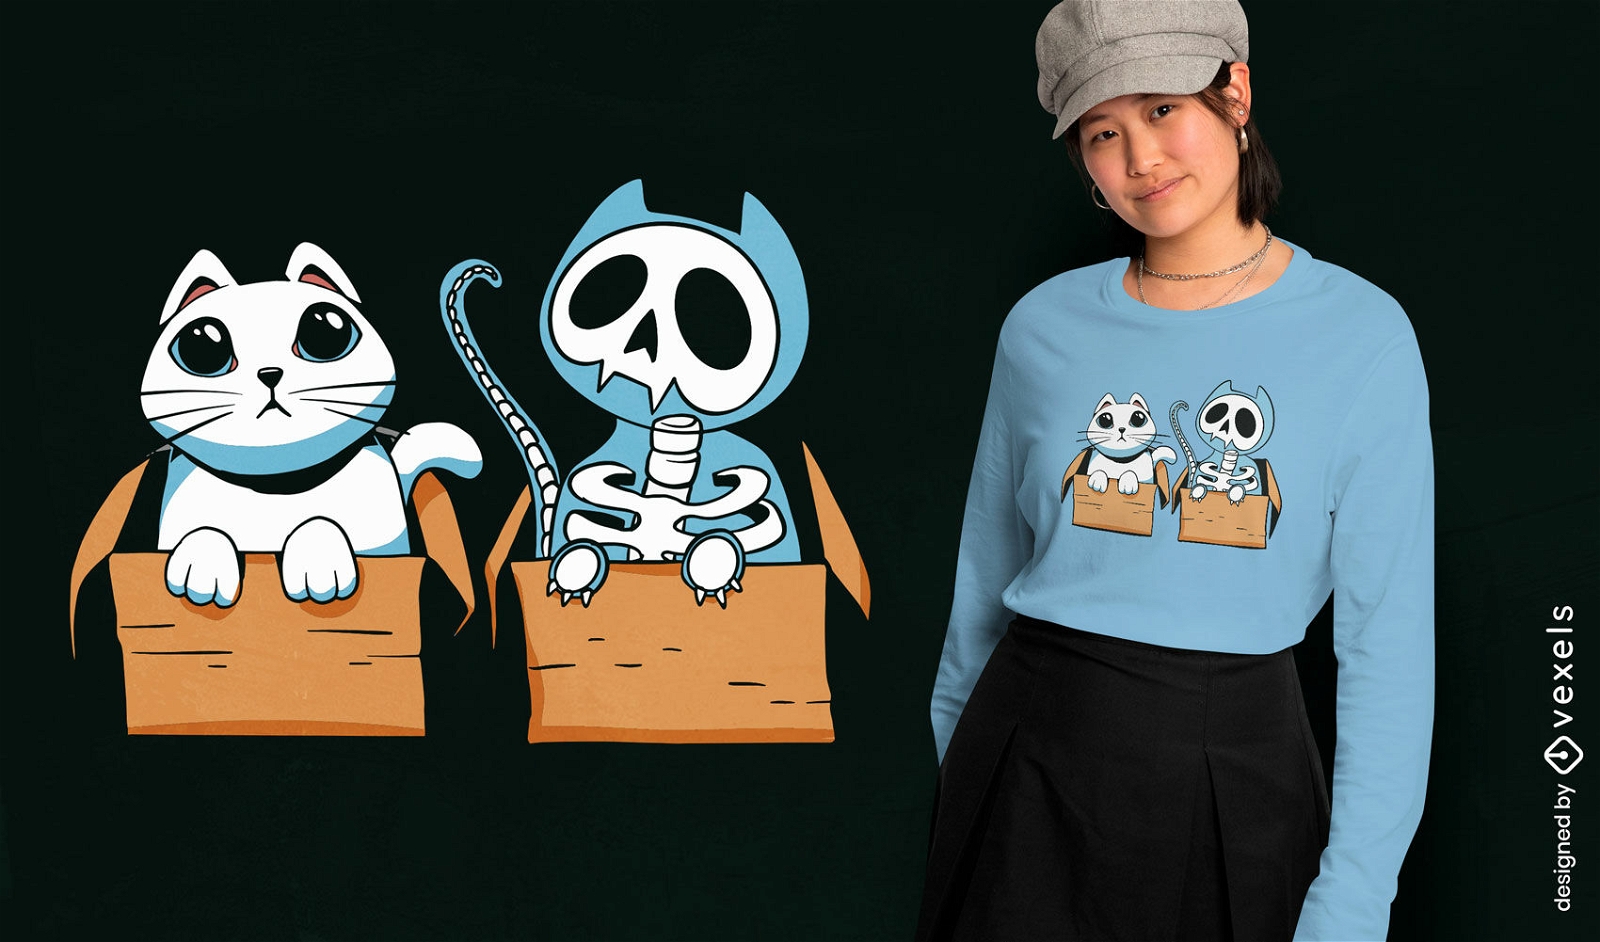 Schr?dinger's cat t-shirt design